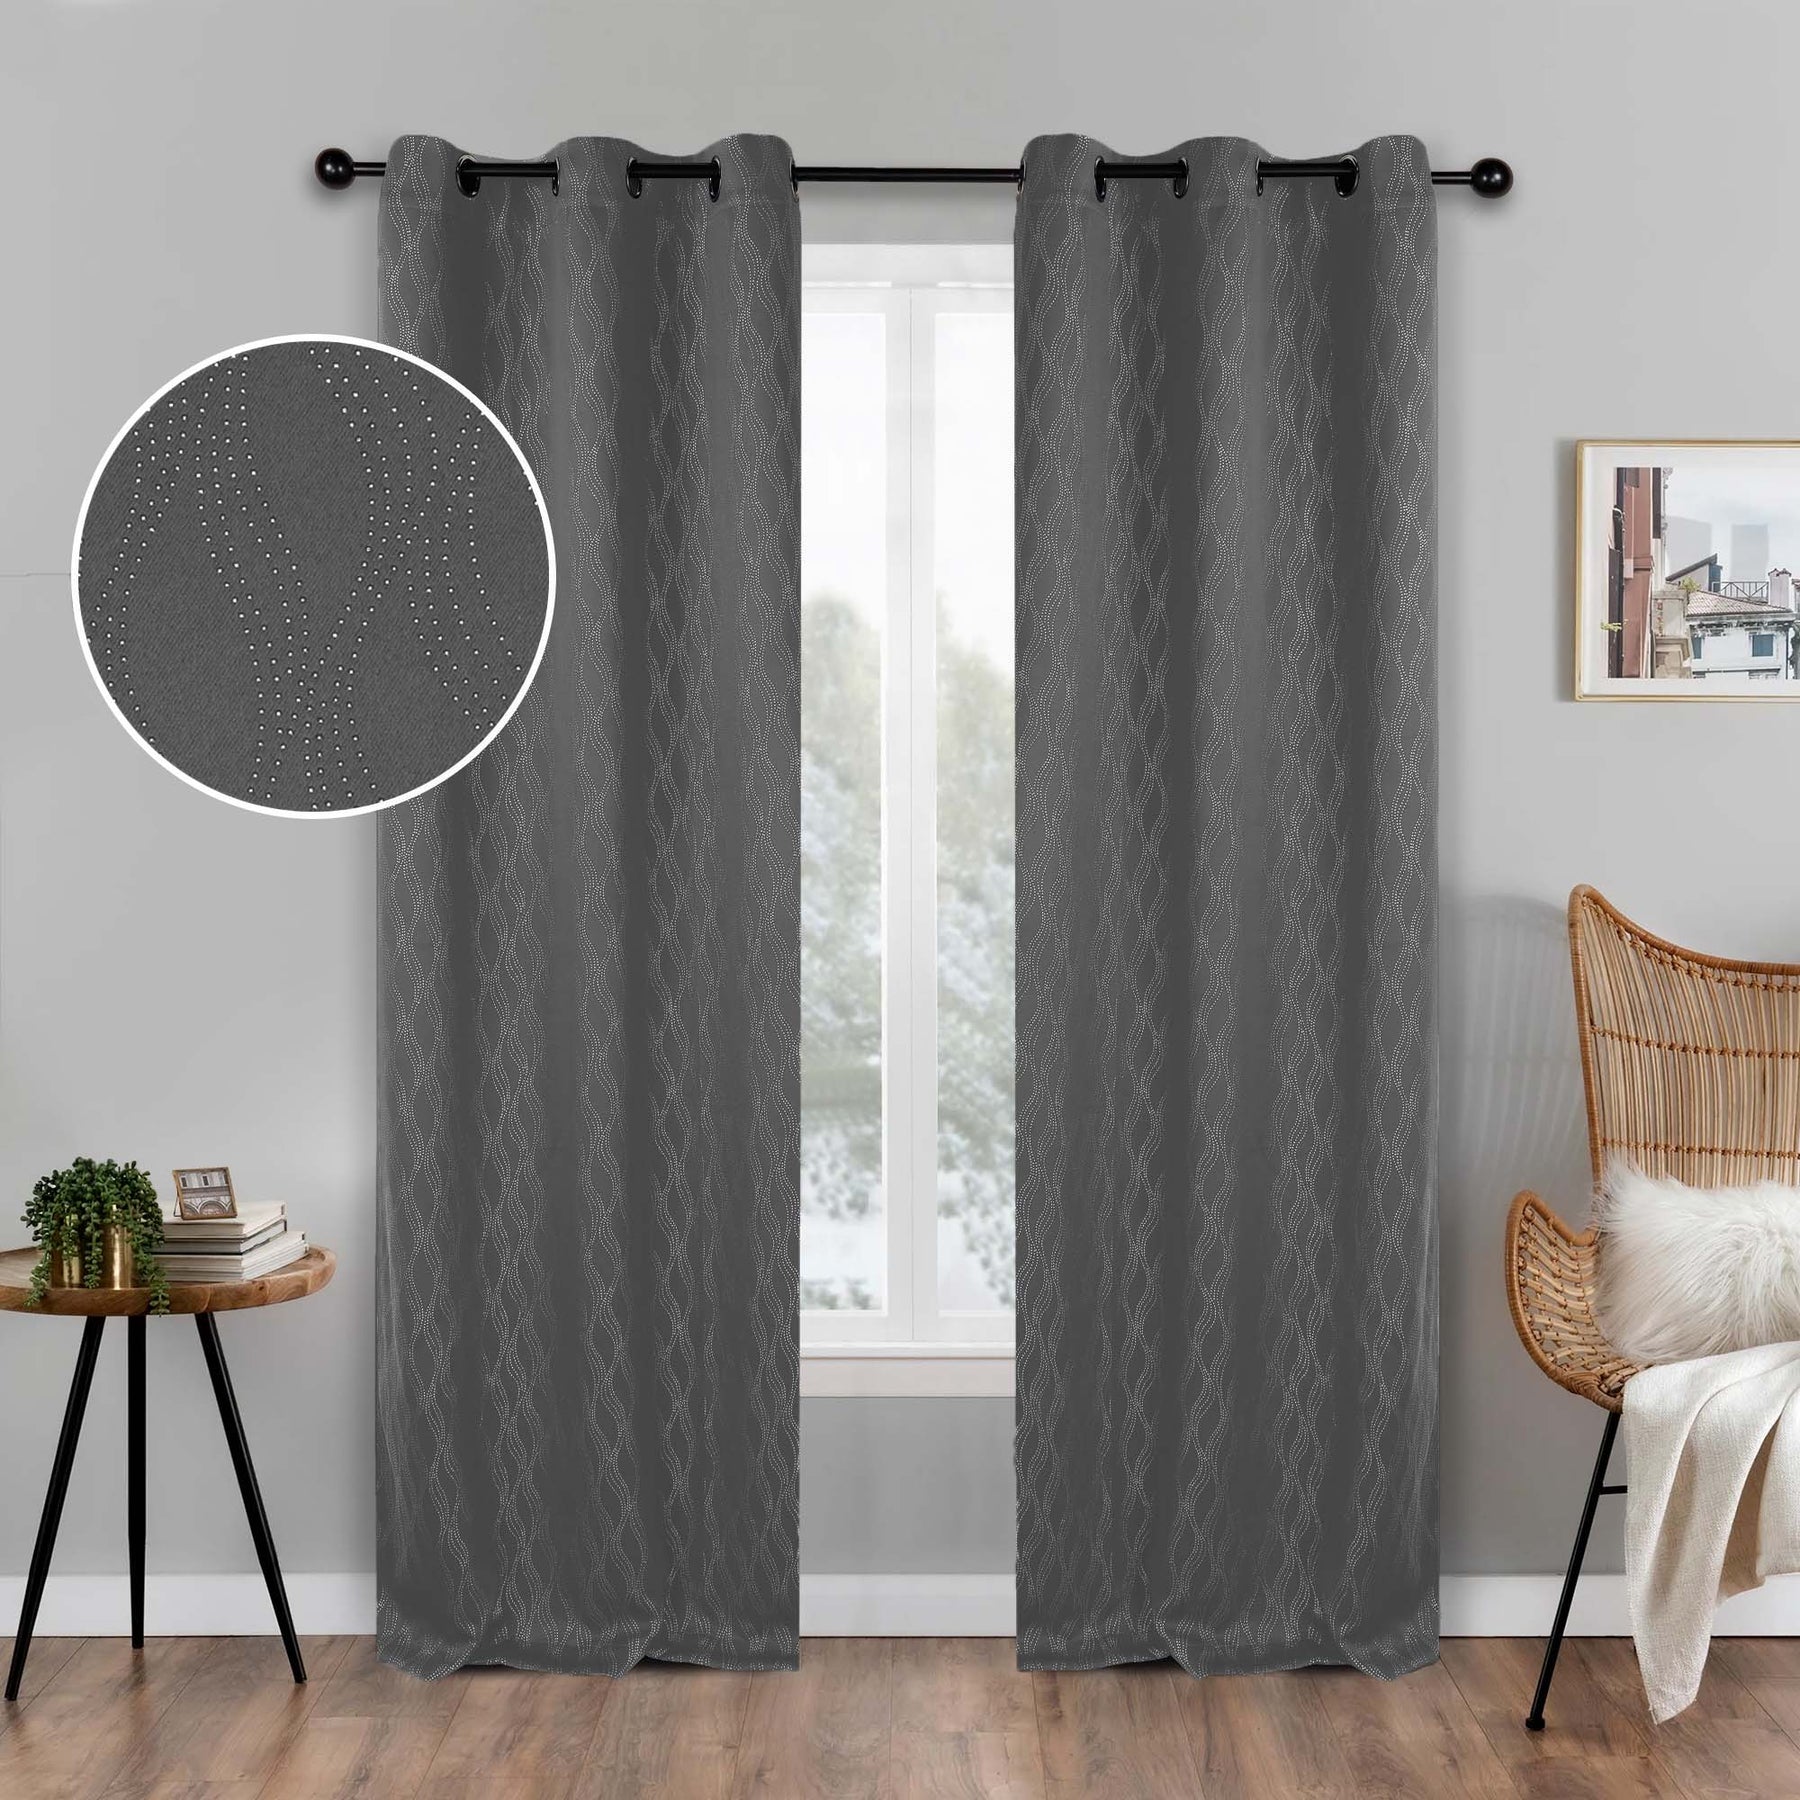 Zuri Textured Blackout Curtain Panels - Charcoal